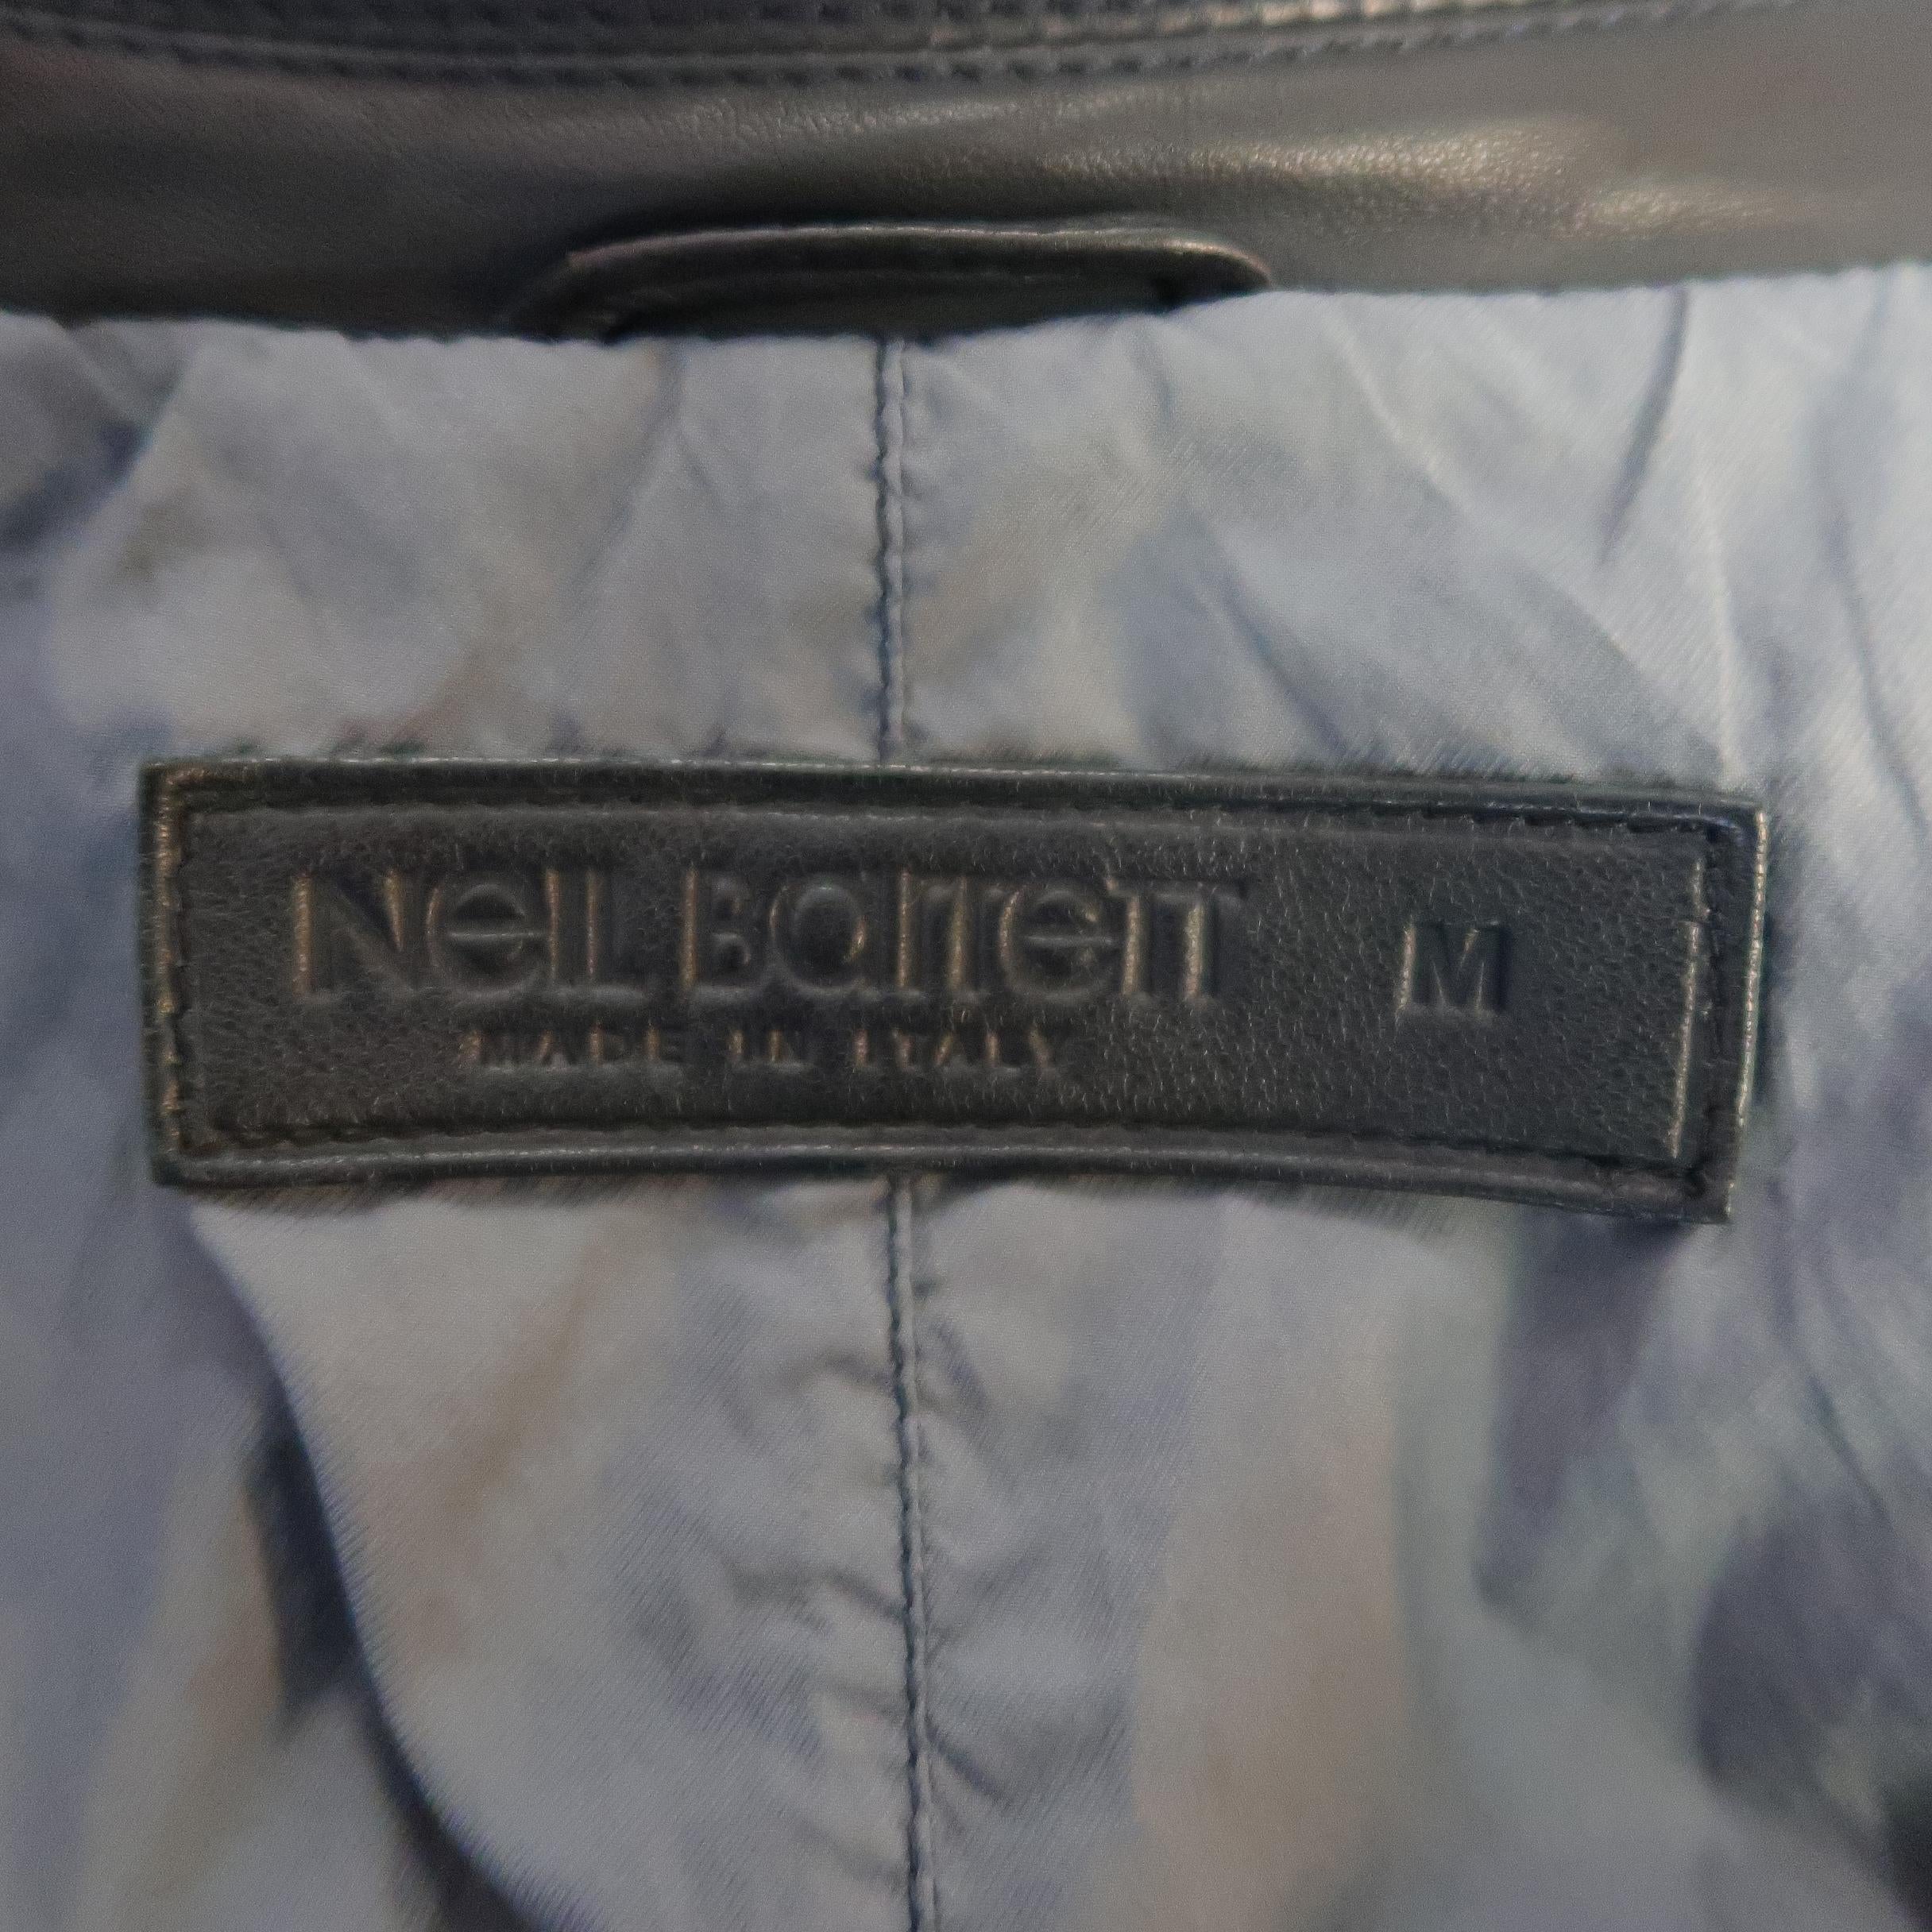 NEIL BARRETT Jacket M Navy Leather Double Breasted Sport Coat Jacket 5